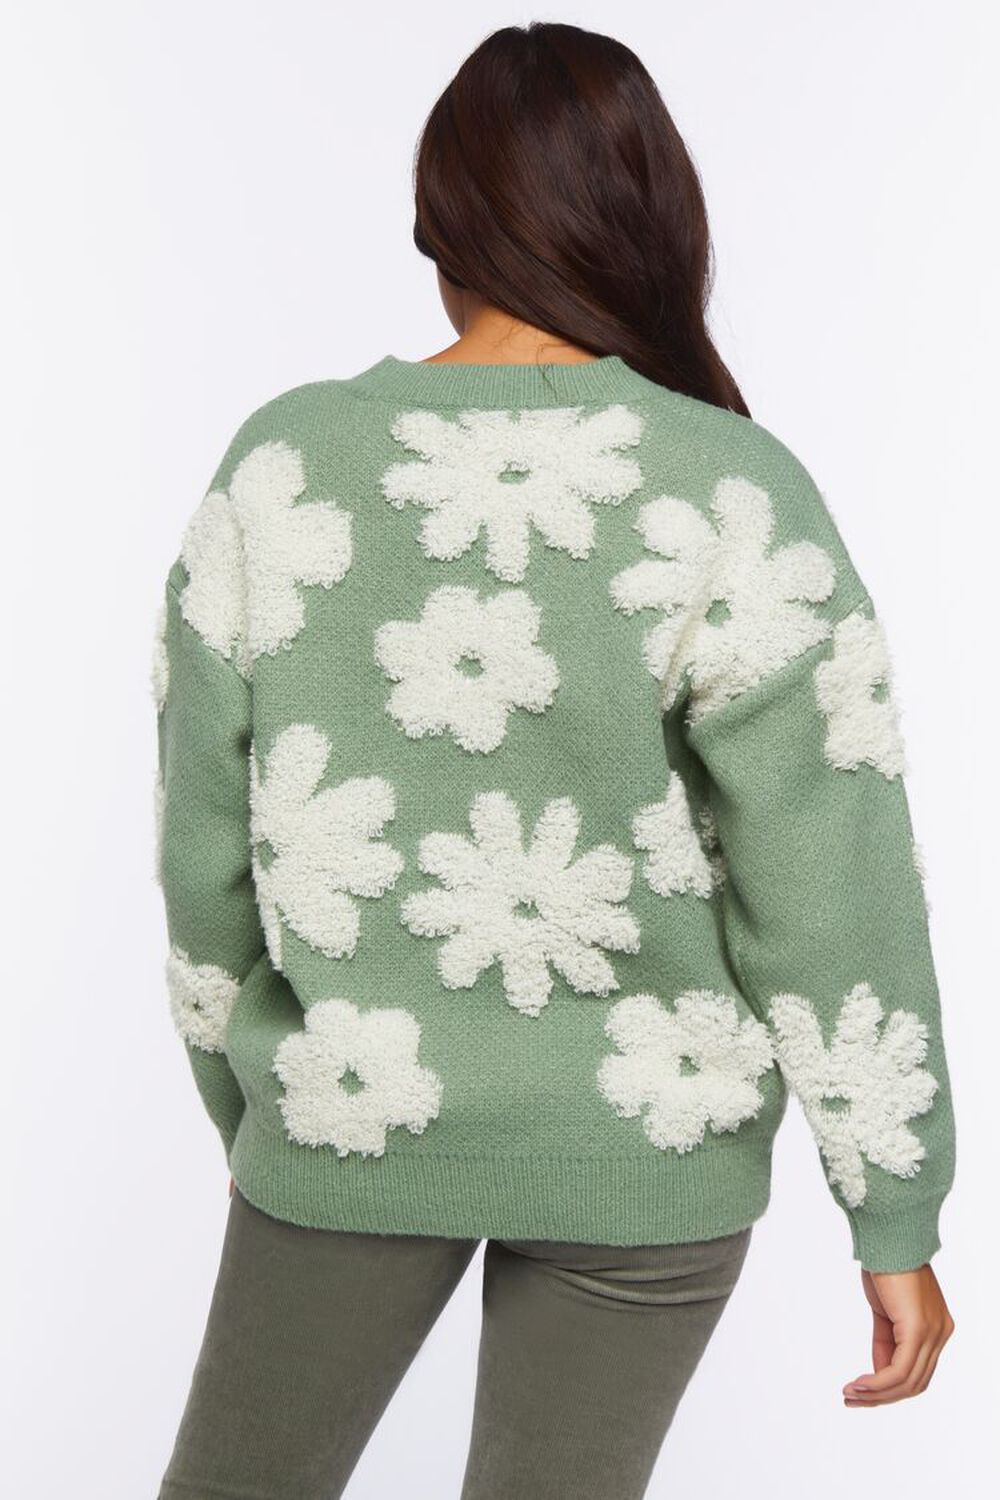 SAGE/WHITE Textured Flower Sweater, image 3